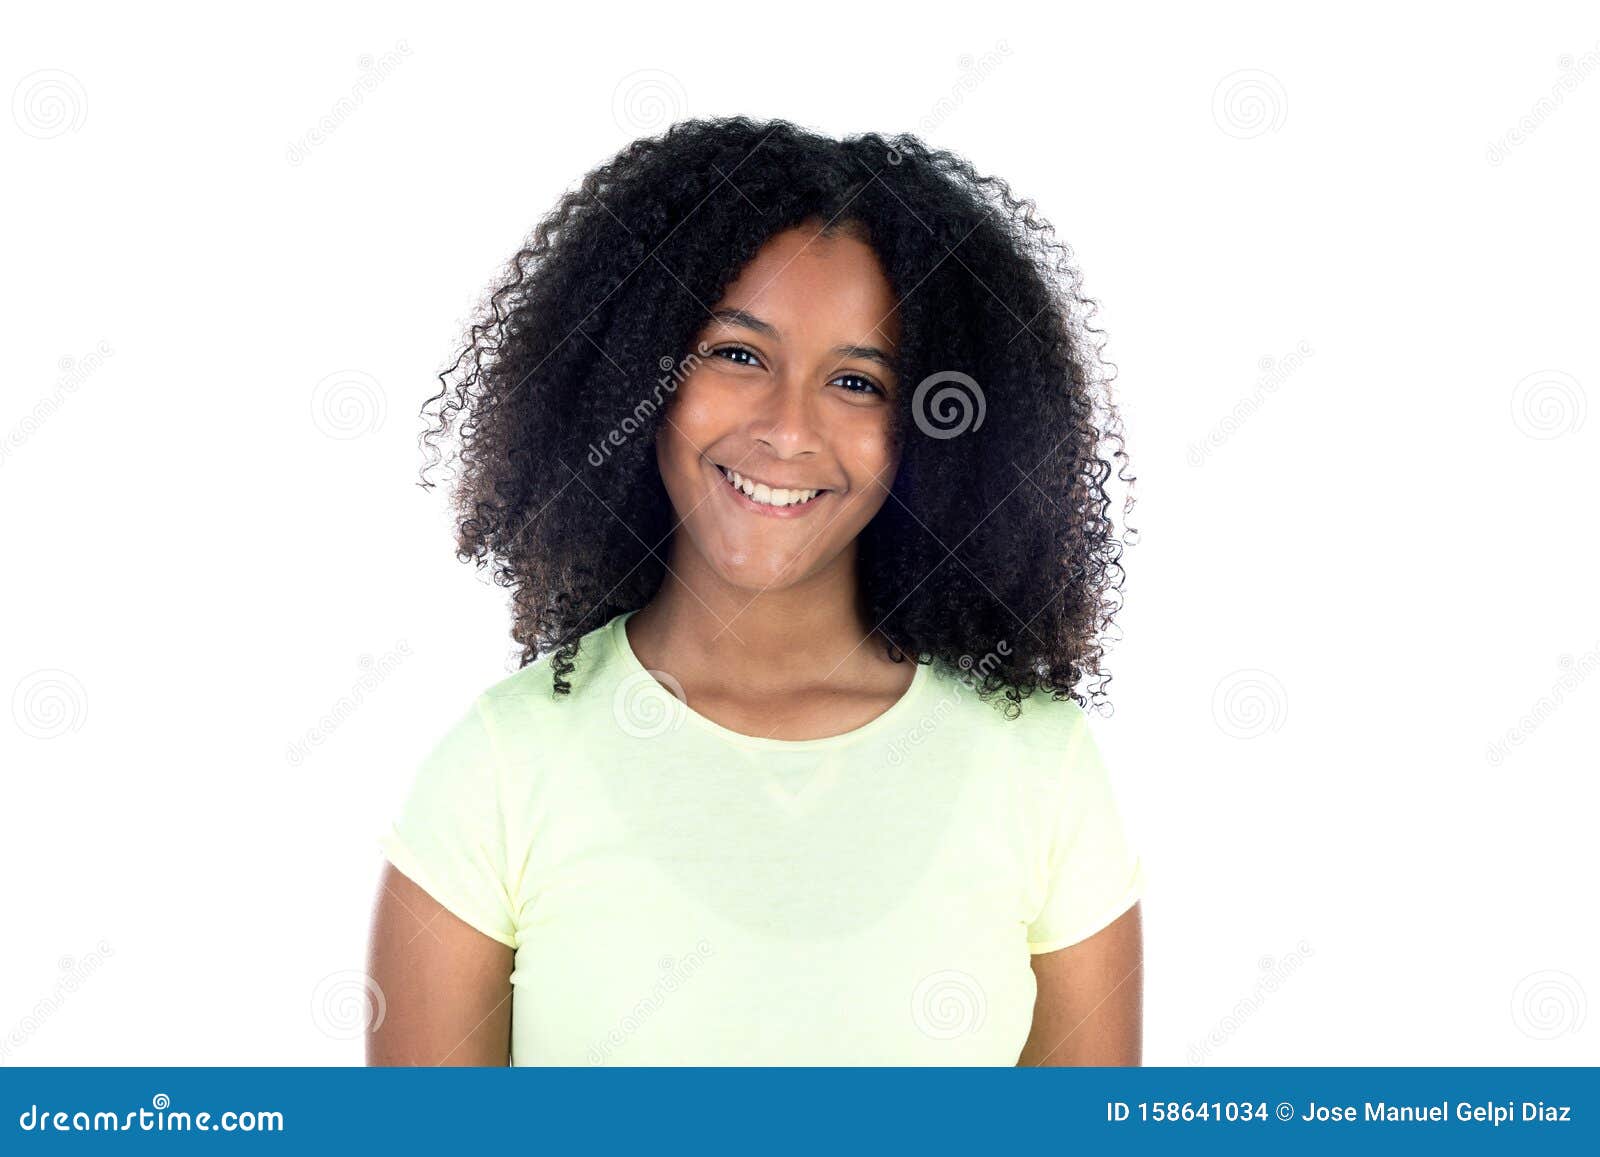 Persona blanca con pelo afro